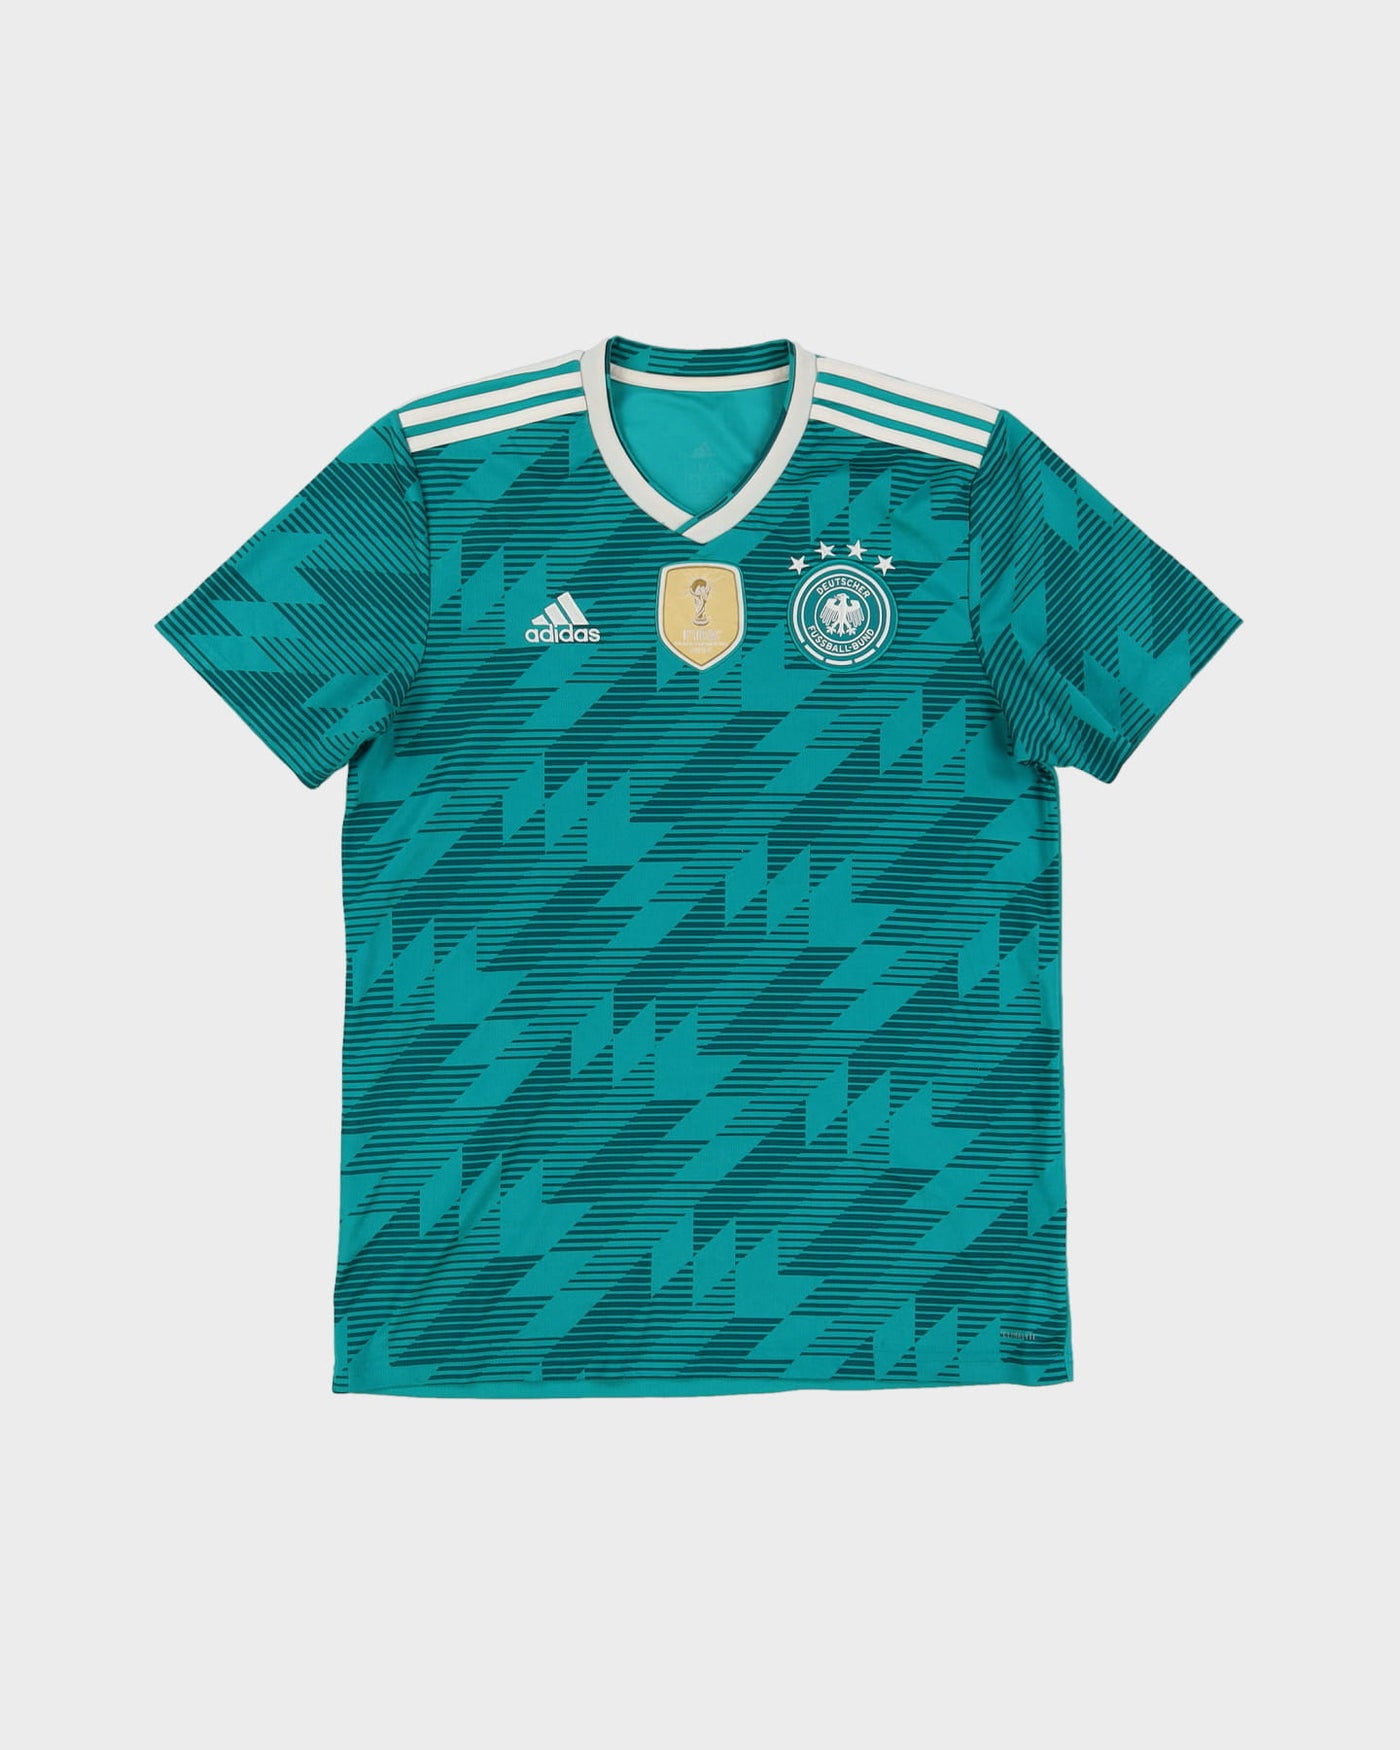 Germany 2018 Champions Badge Green Adidas Football Shirt / Jersey - M